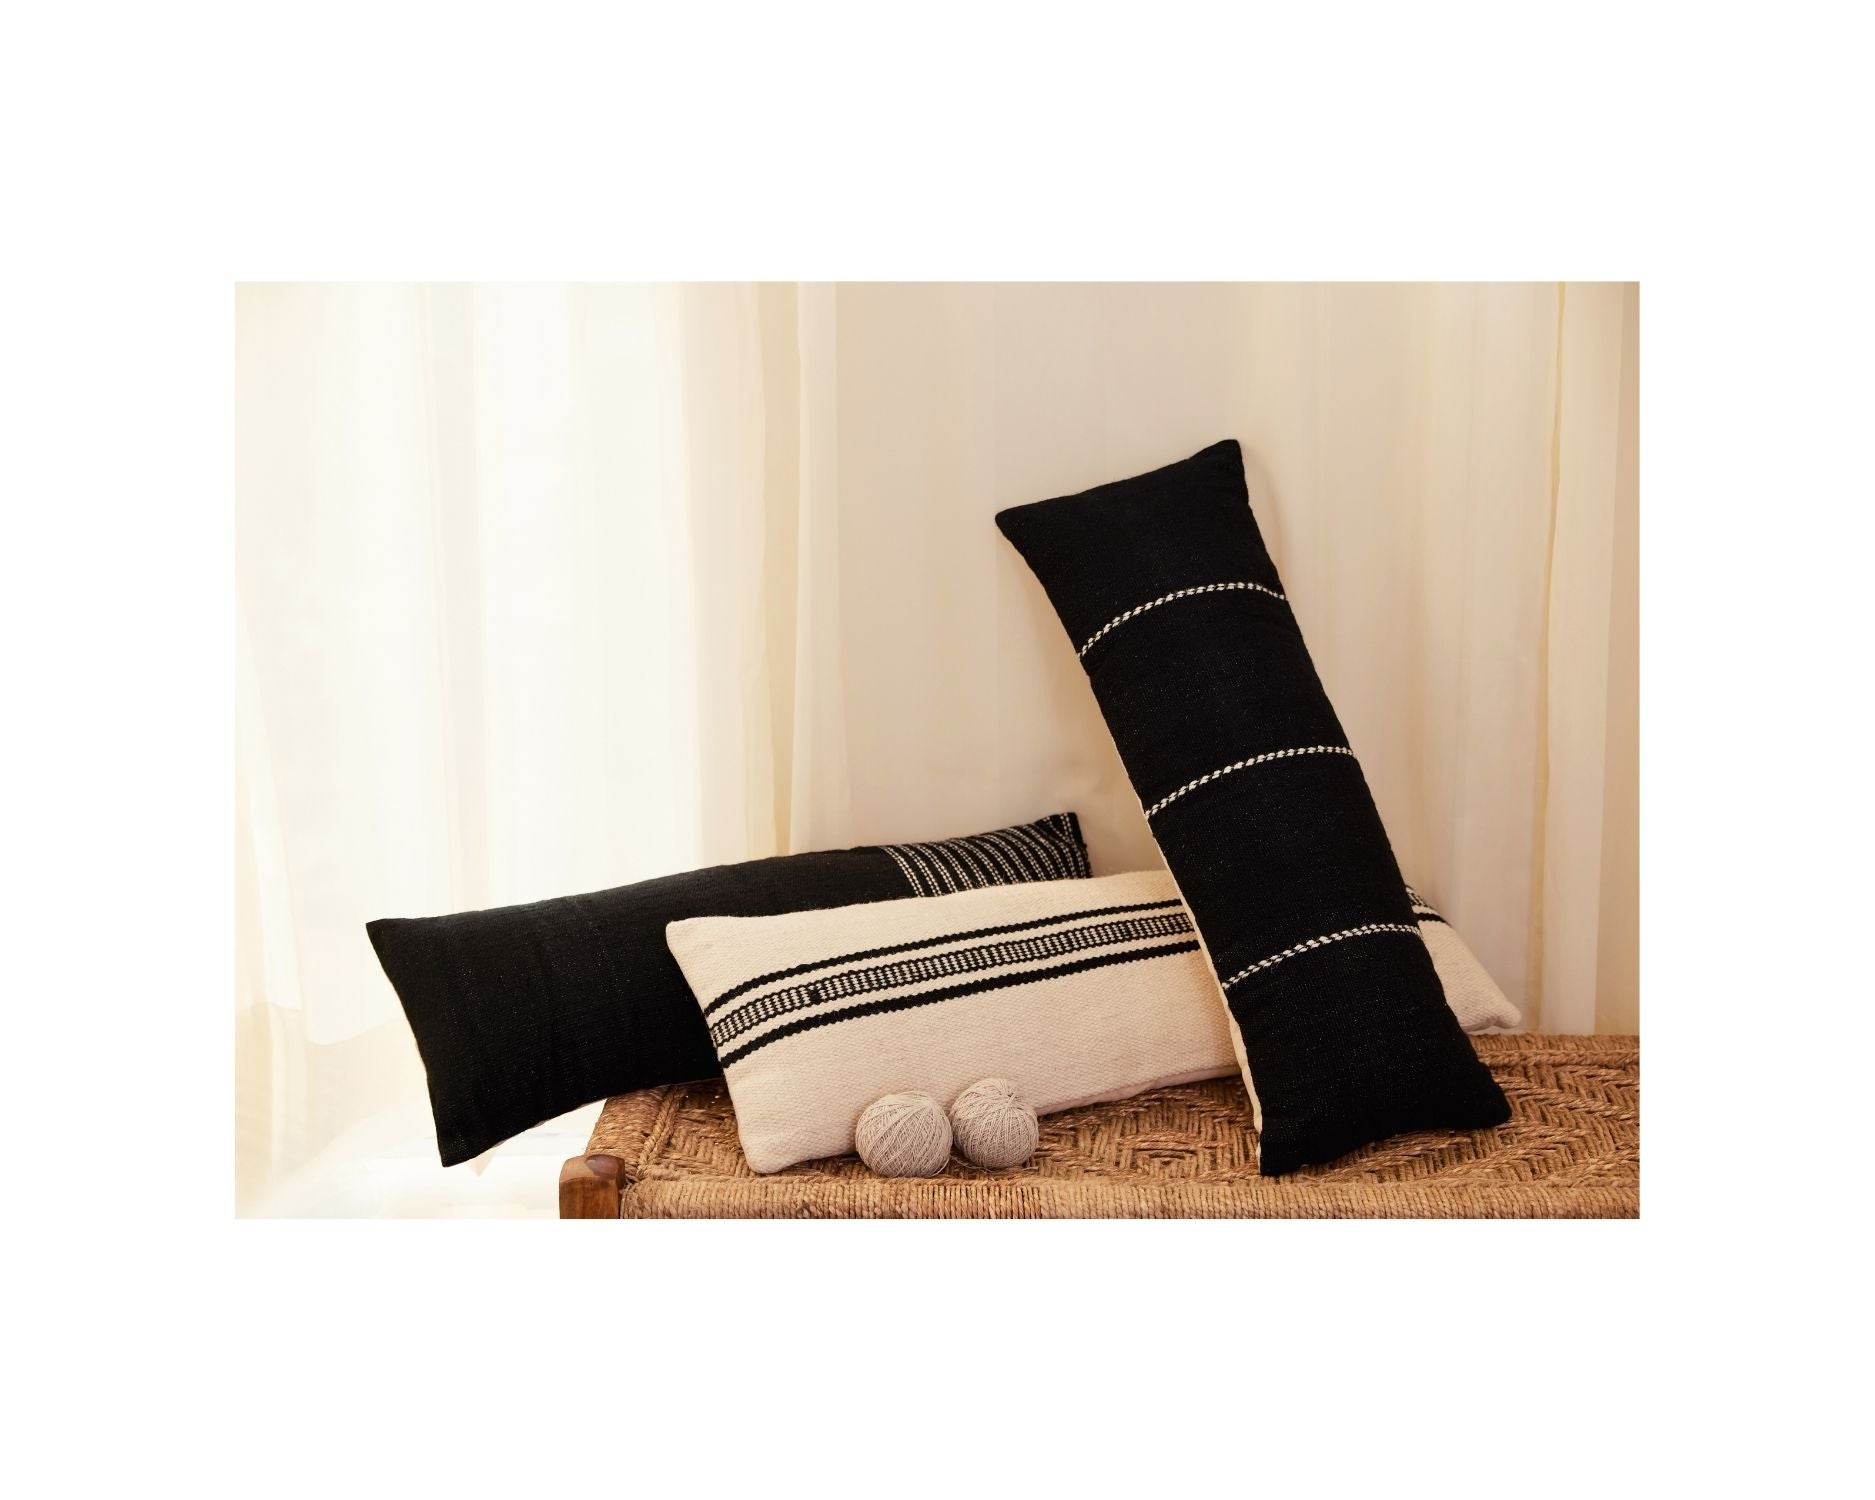 GoodWeave Certified Stripe Lumbar Wool Pillow - Black, 12x34 Inch